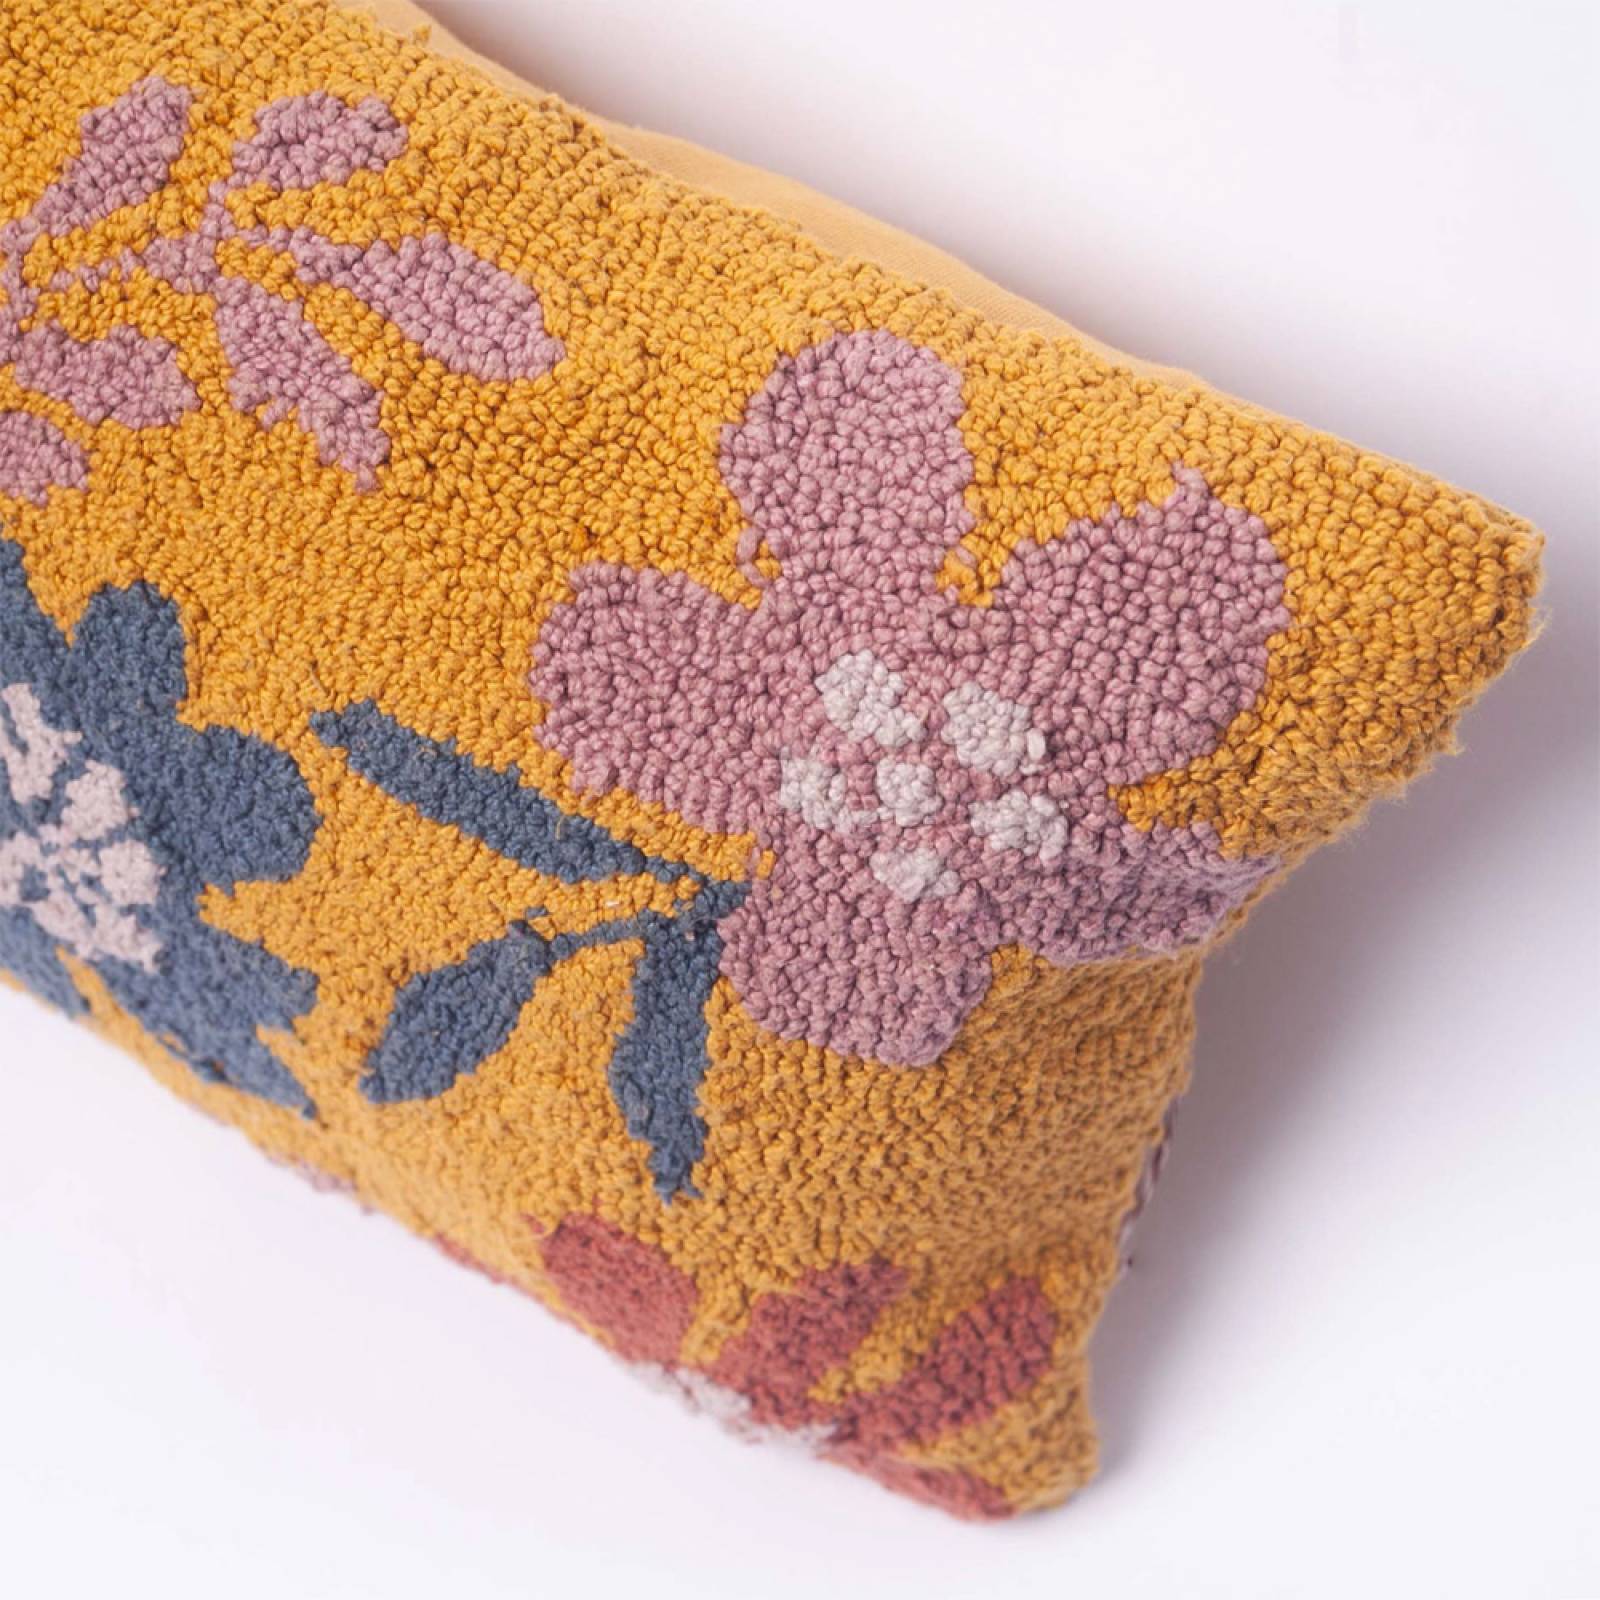 Rectangular Tufted Cushion With Flowers 50x30cm thumbnails